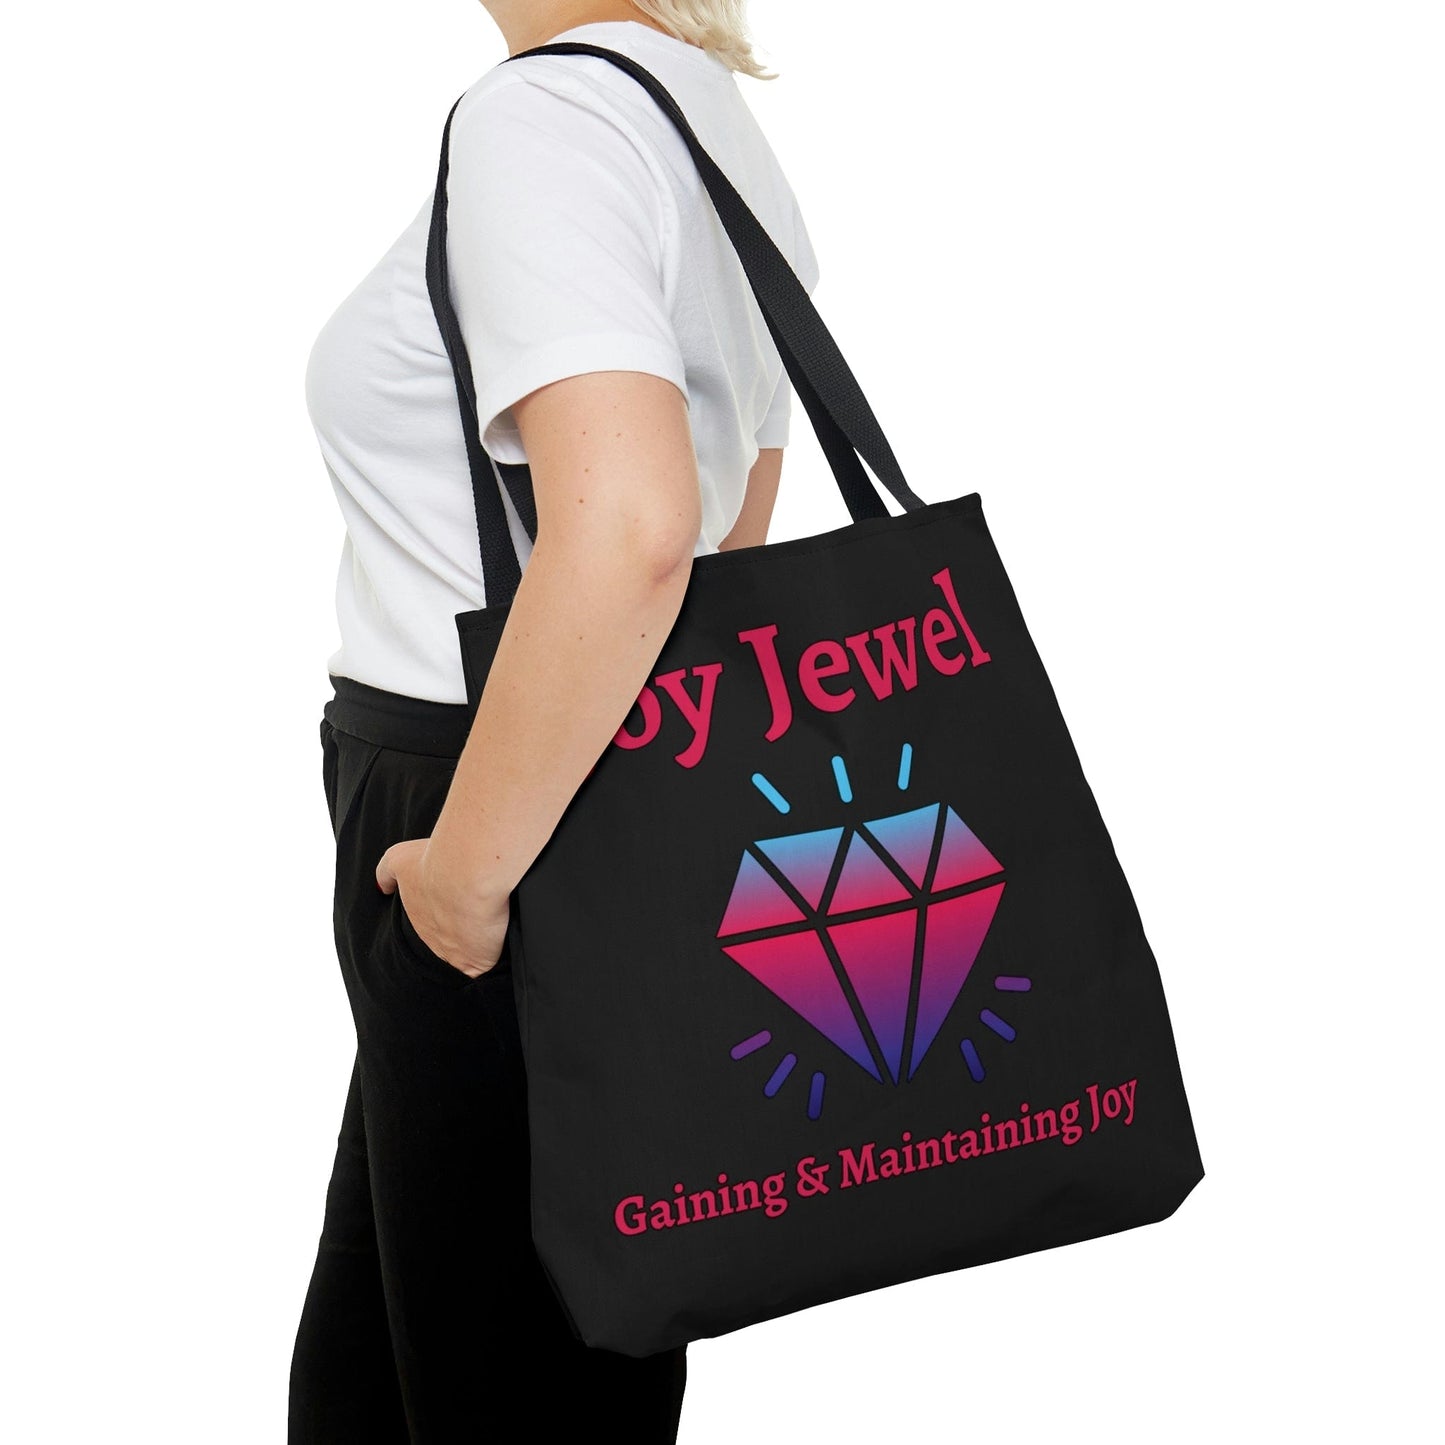 Joy Jewel (Graphic Text & Diamond) Black Tote Bag